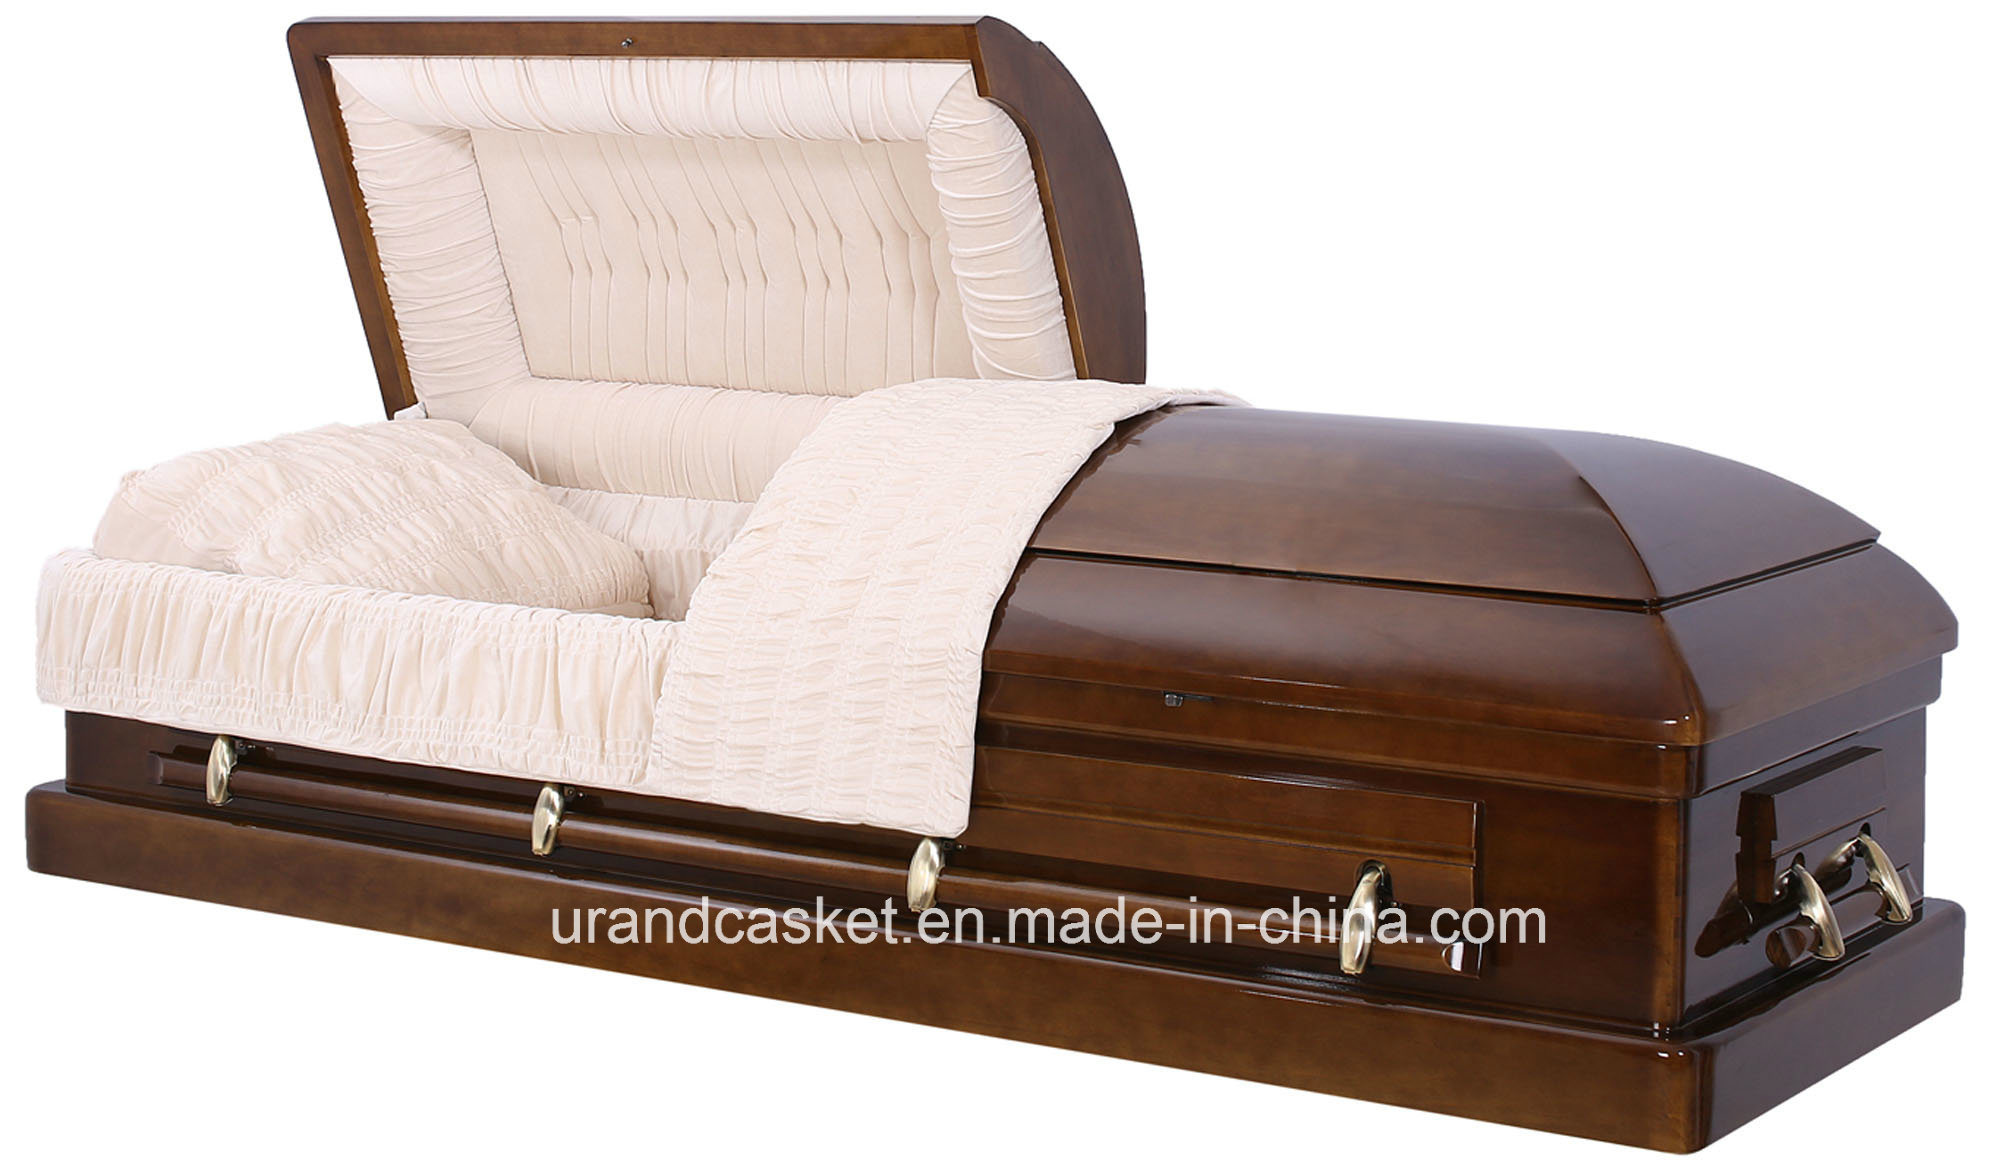 Urd-A222 Wholesale American Style Wooden Beds Casket